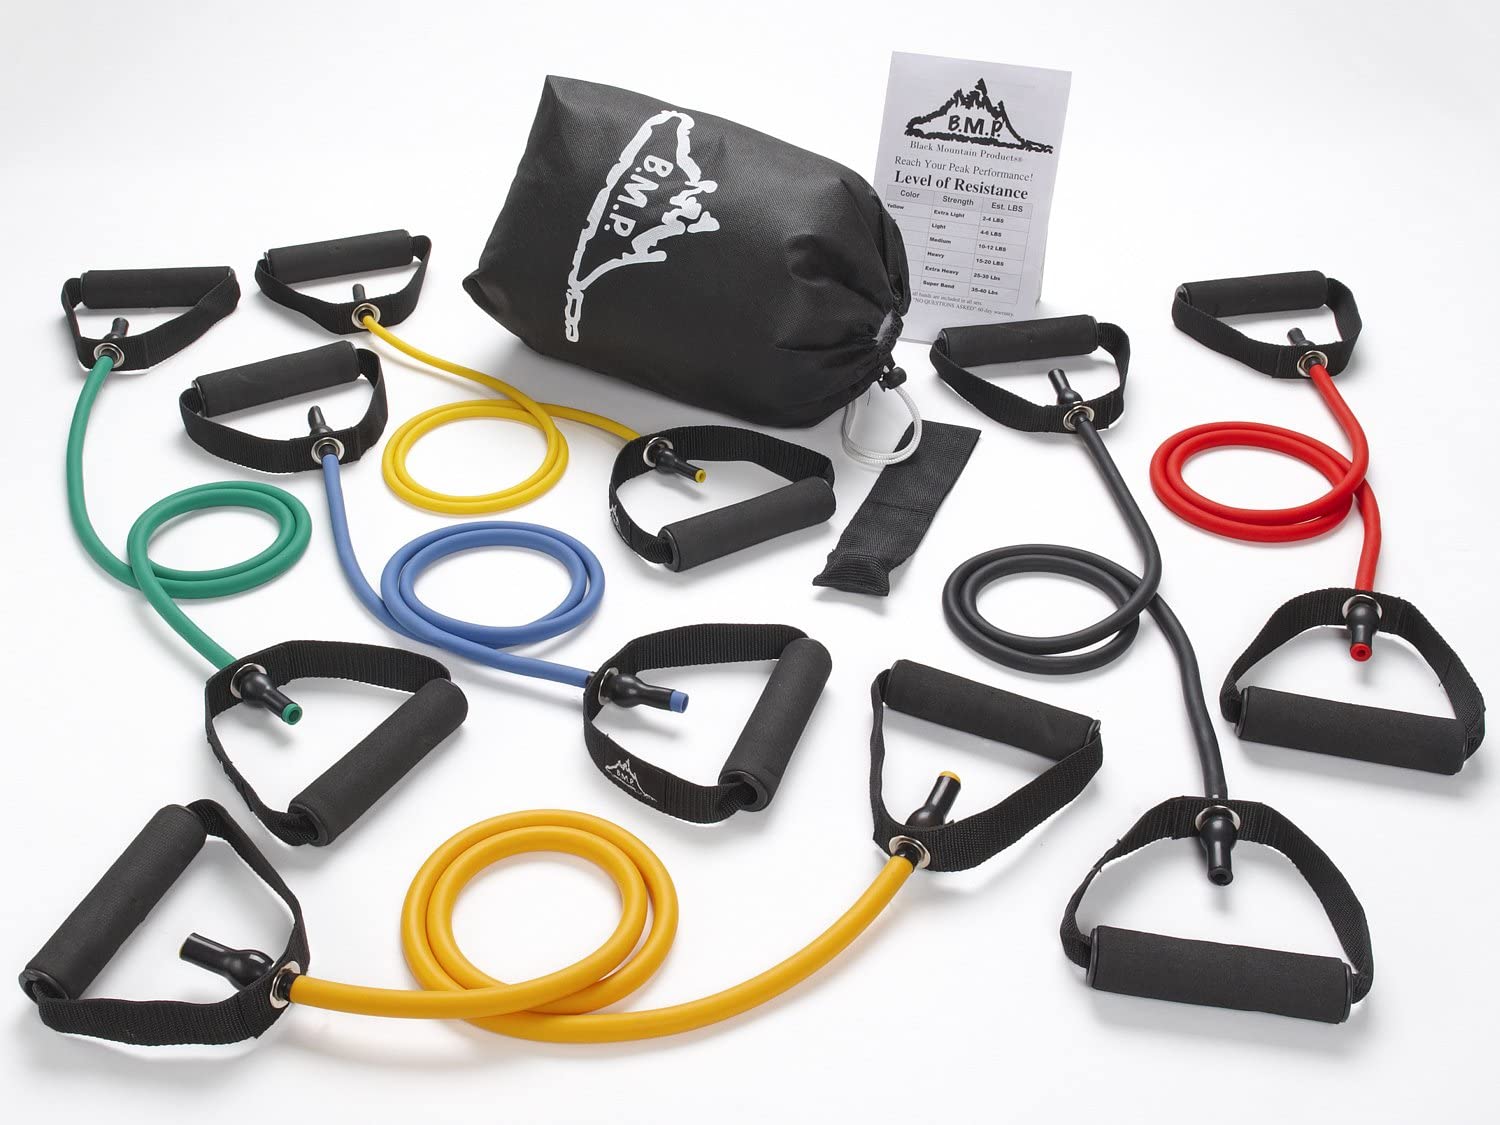 Pilates Bar Kit with Resistance Bands, WeluvFit Adjustable Bands